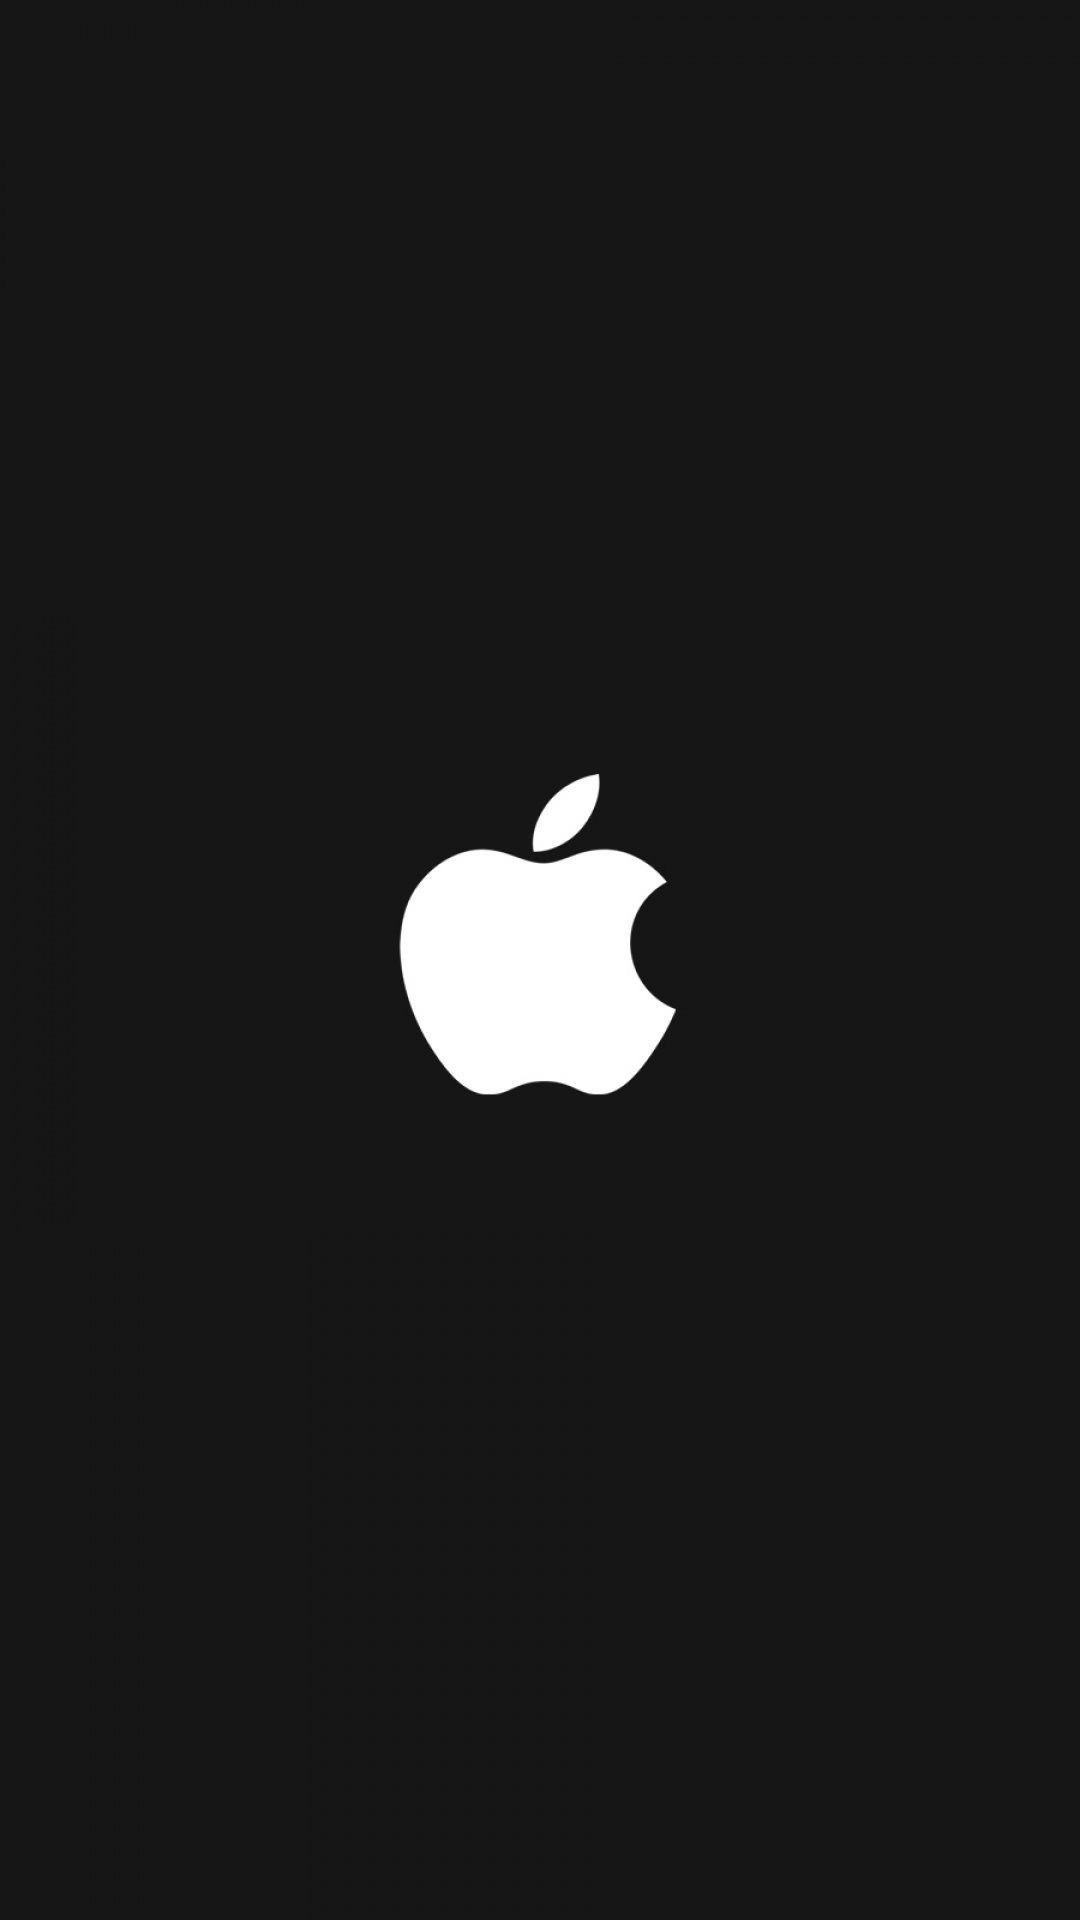 White apple logo